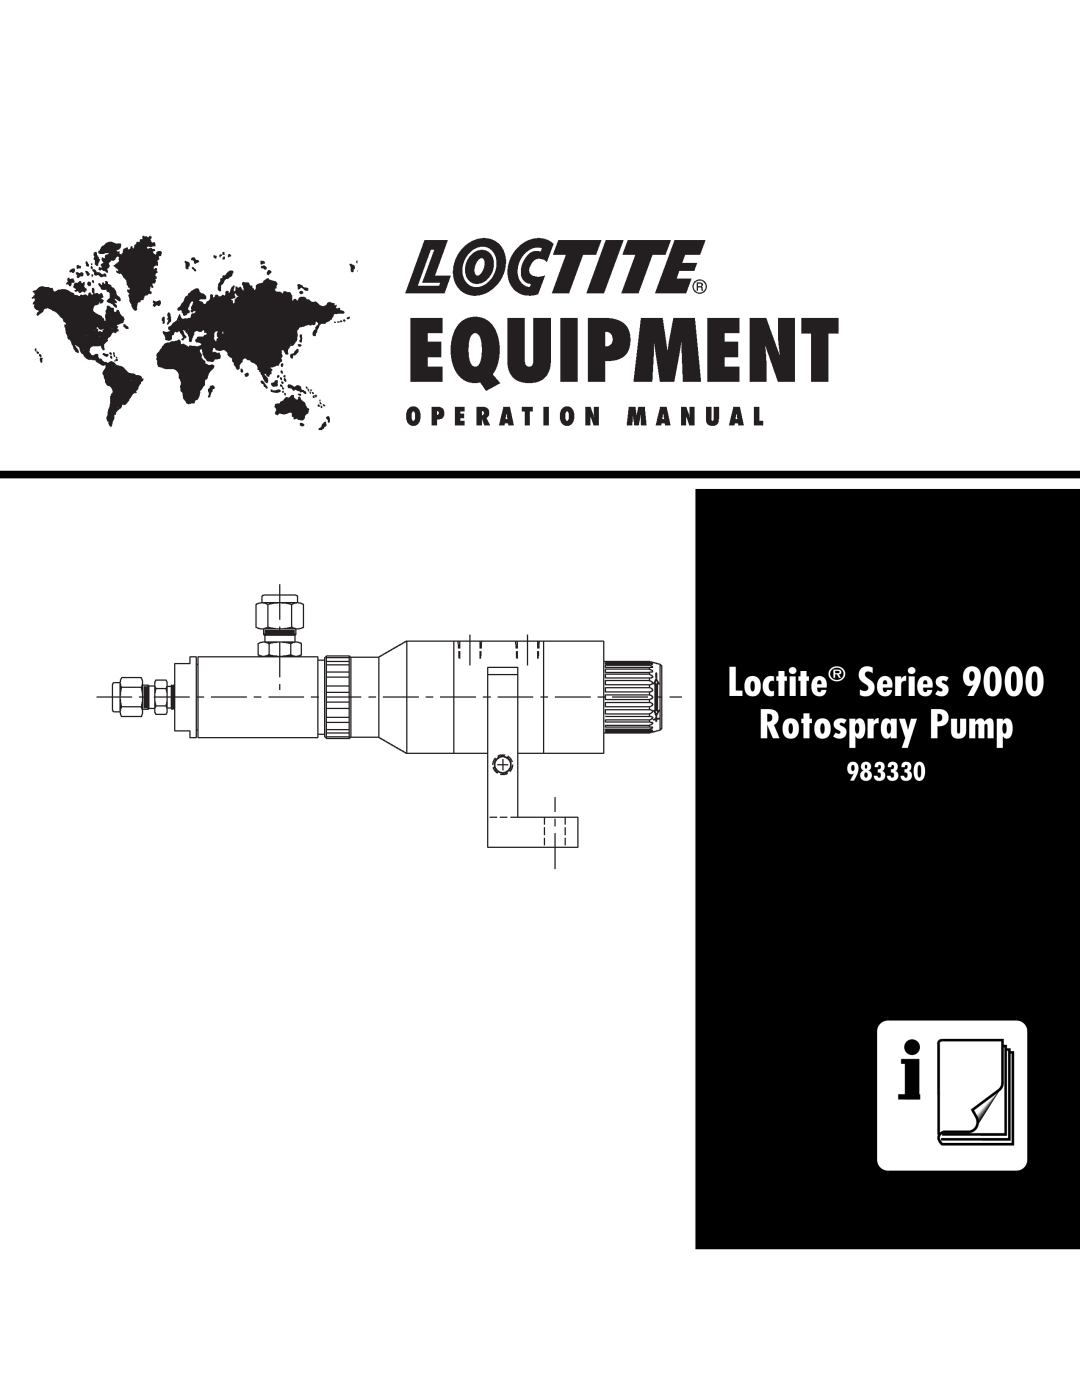 Henkel 9000 operation manual Equipment, Loctite Series Rotospray Pump, O P E R A T I O N M A N U A L, 983330 